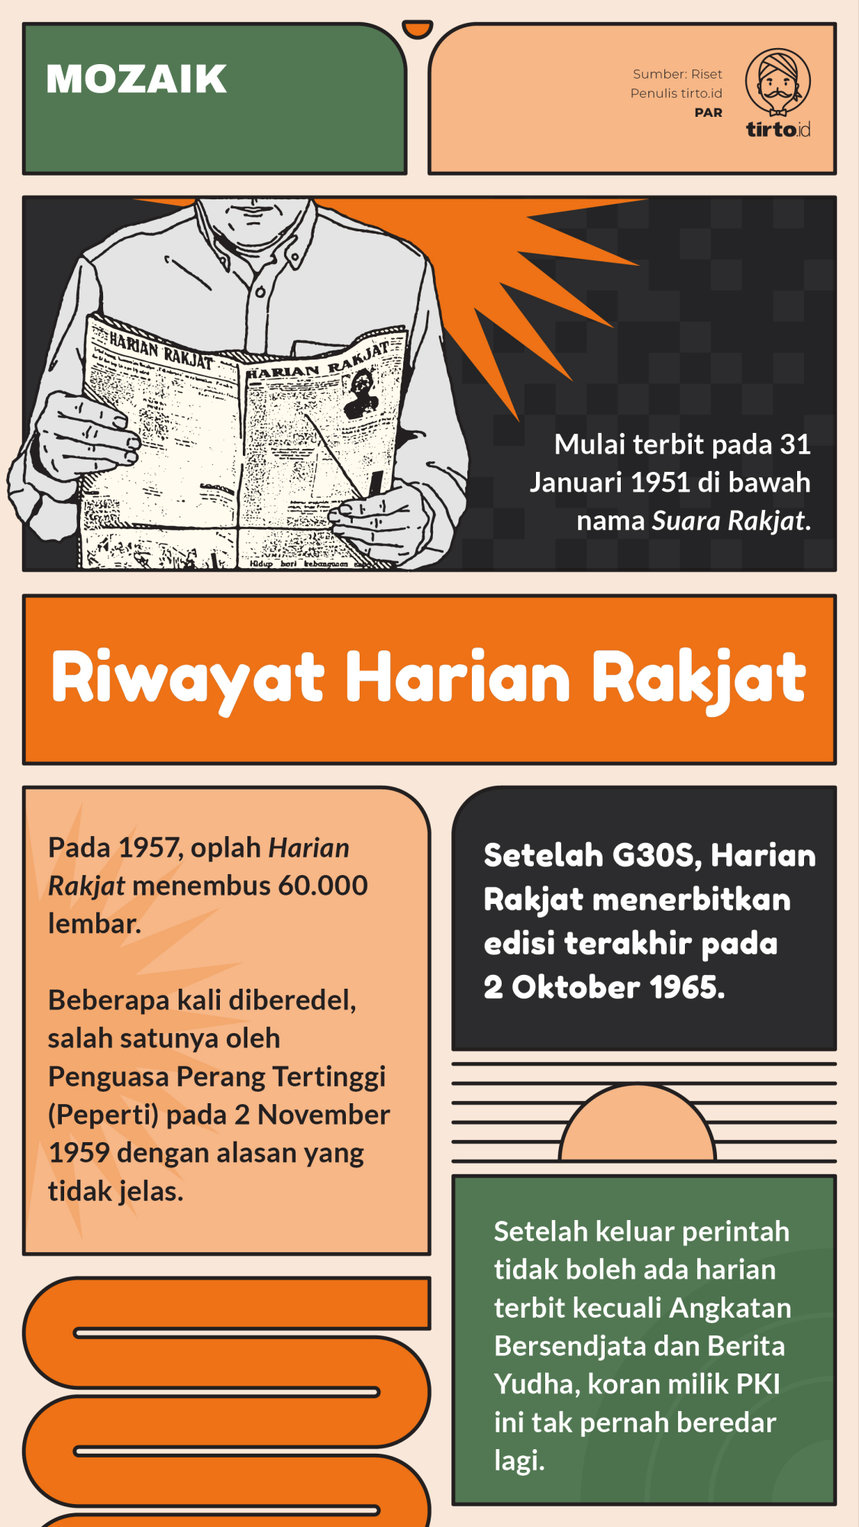 Infografik Mozaik Riwayat Harian Rakjat